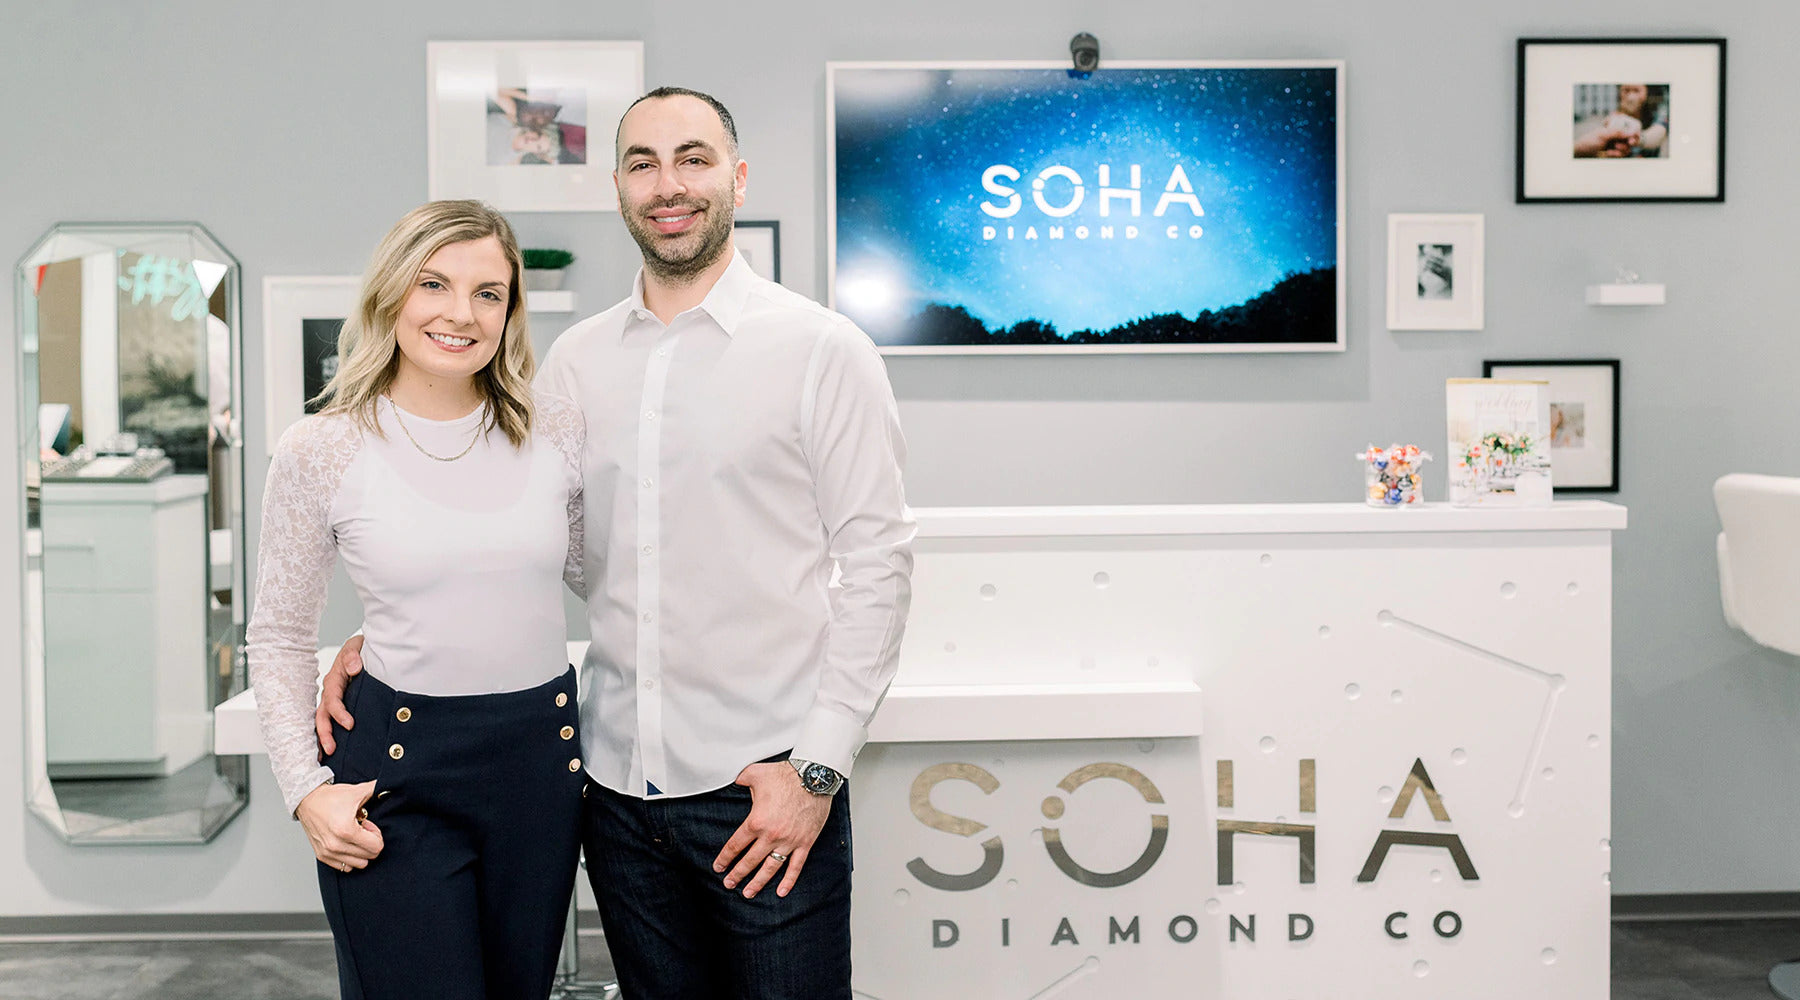 Soha Diamond Co. founders